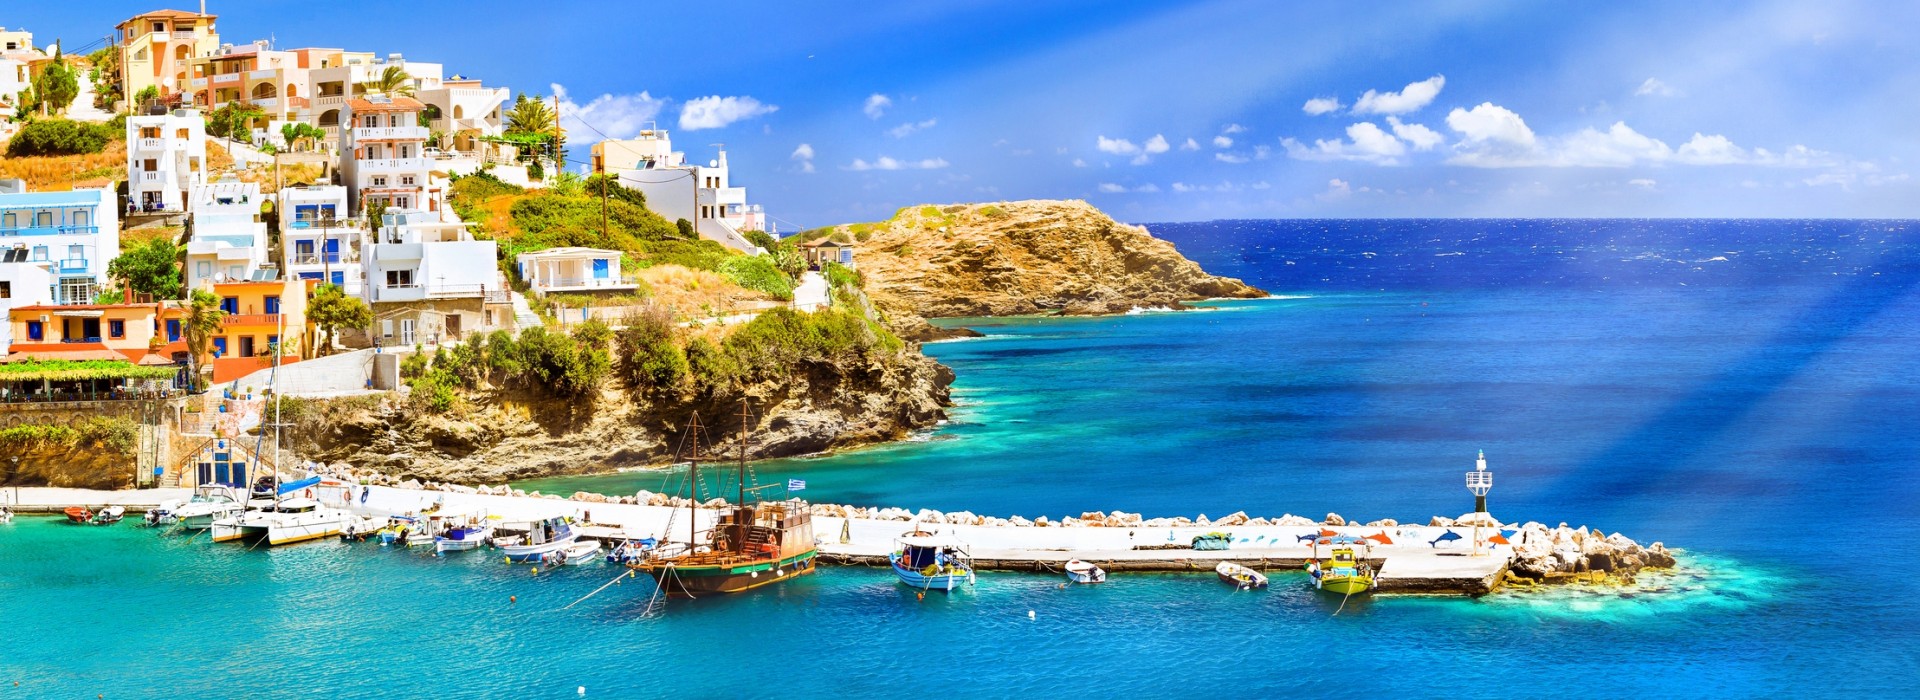 Royal Caribbean Greece & Croatia Cruise 7 Night & 8 Days